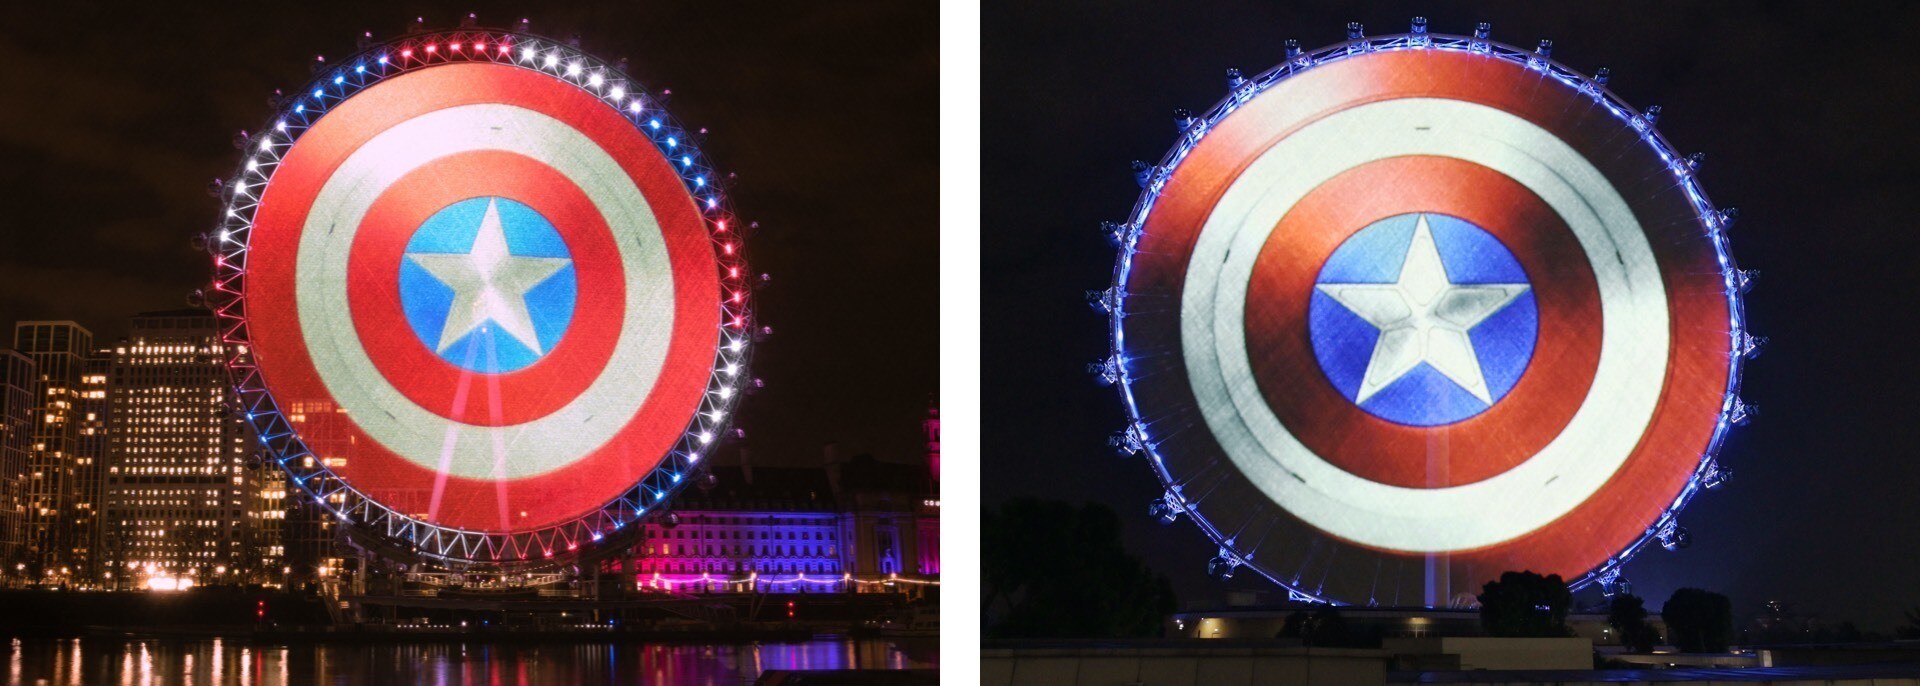 London Eye, Londra, UK e Singapore Flyer, Singapore